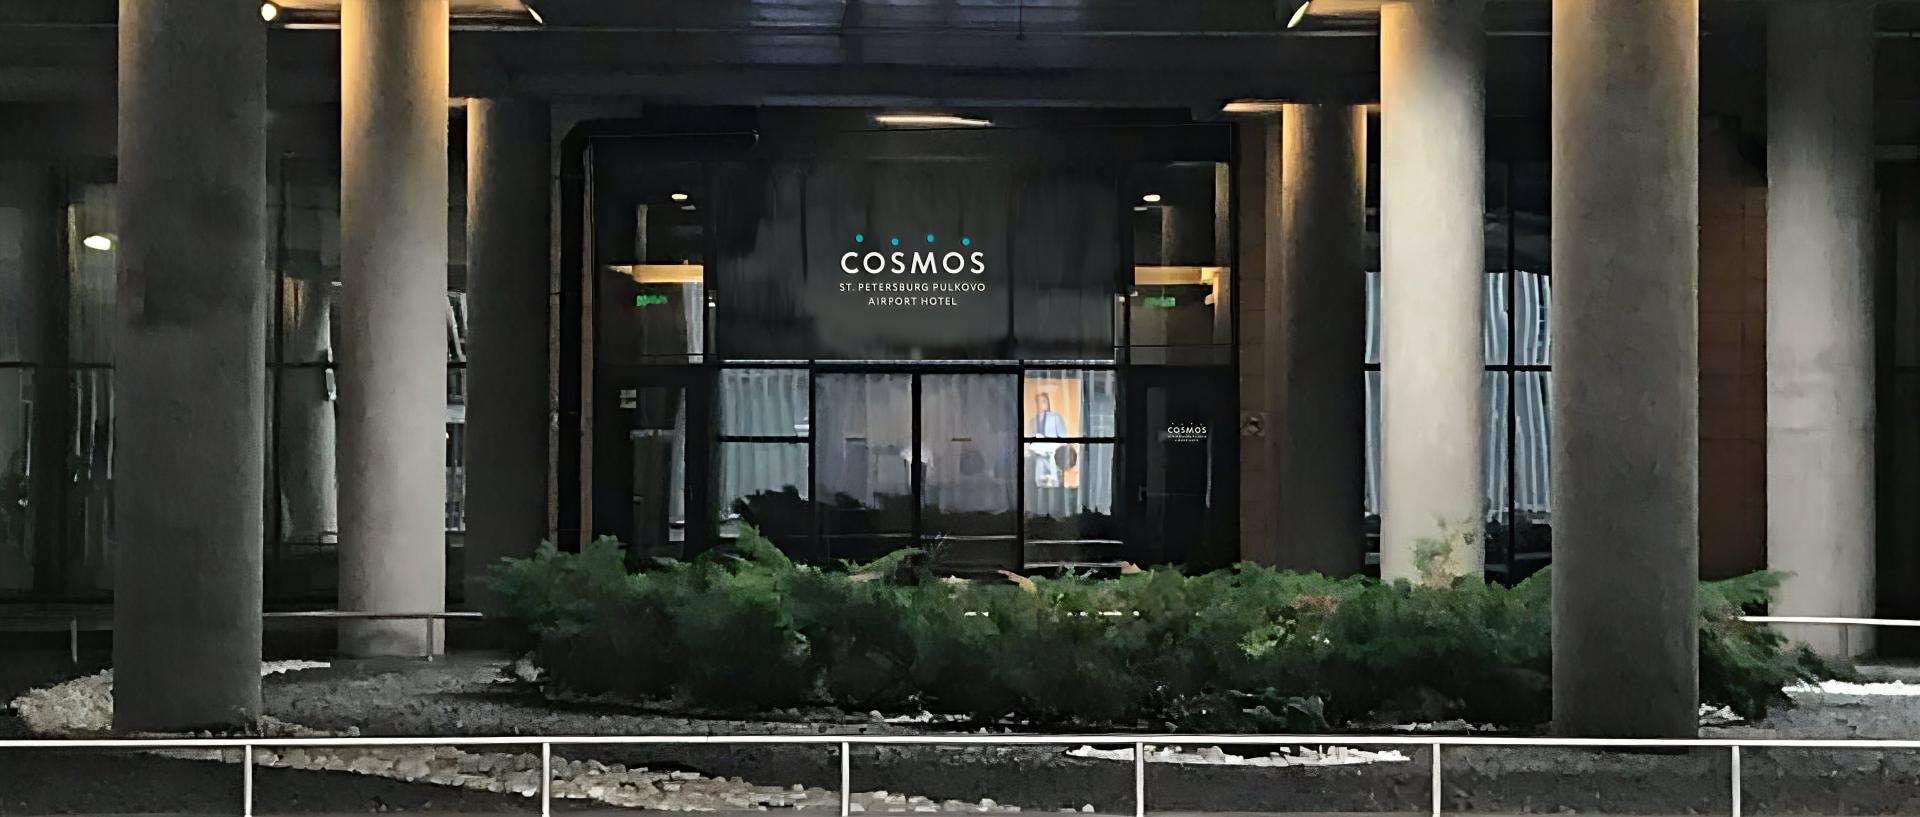 Cosmos Saint-Petersburg Pulkovo Airport Hotel